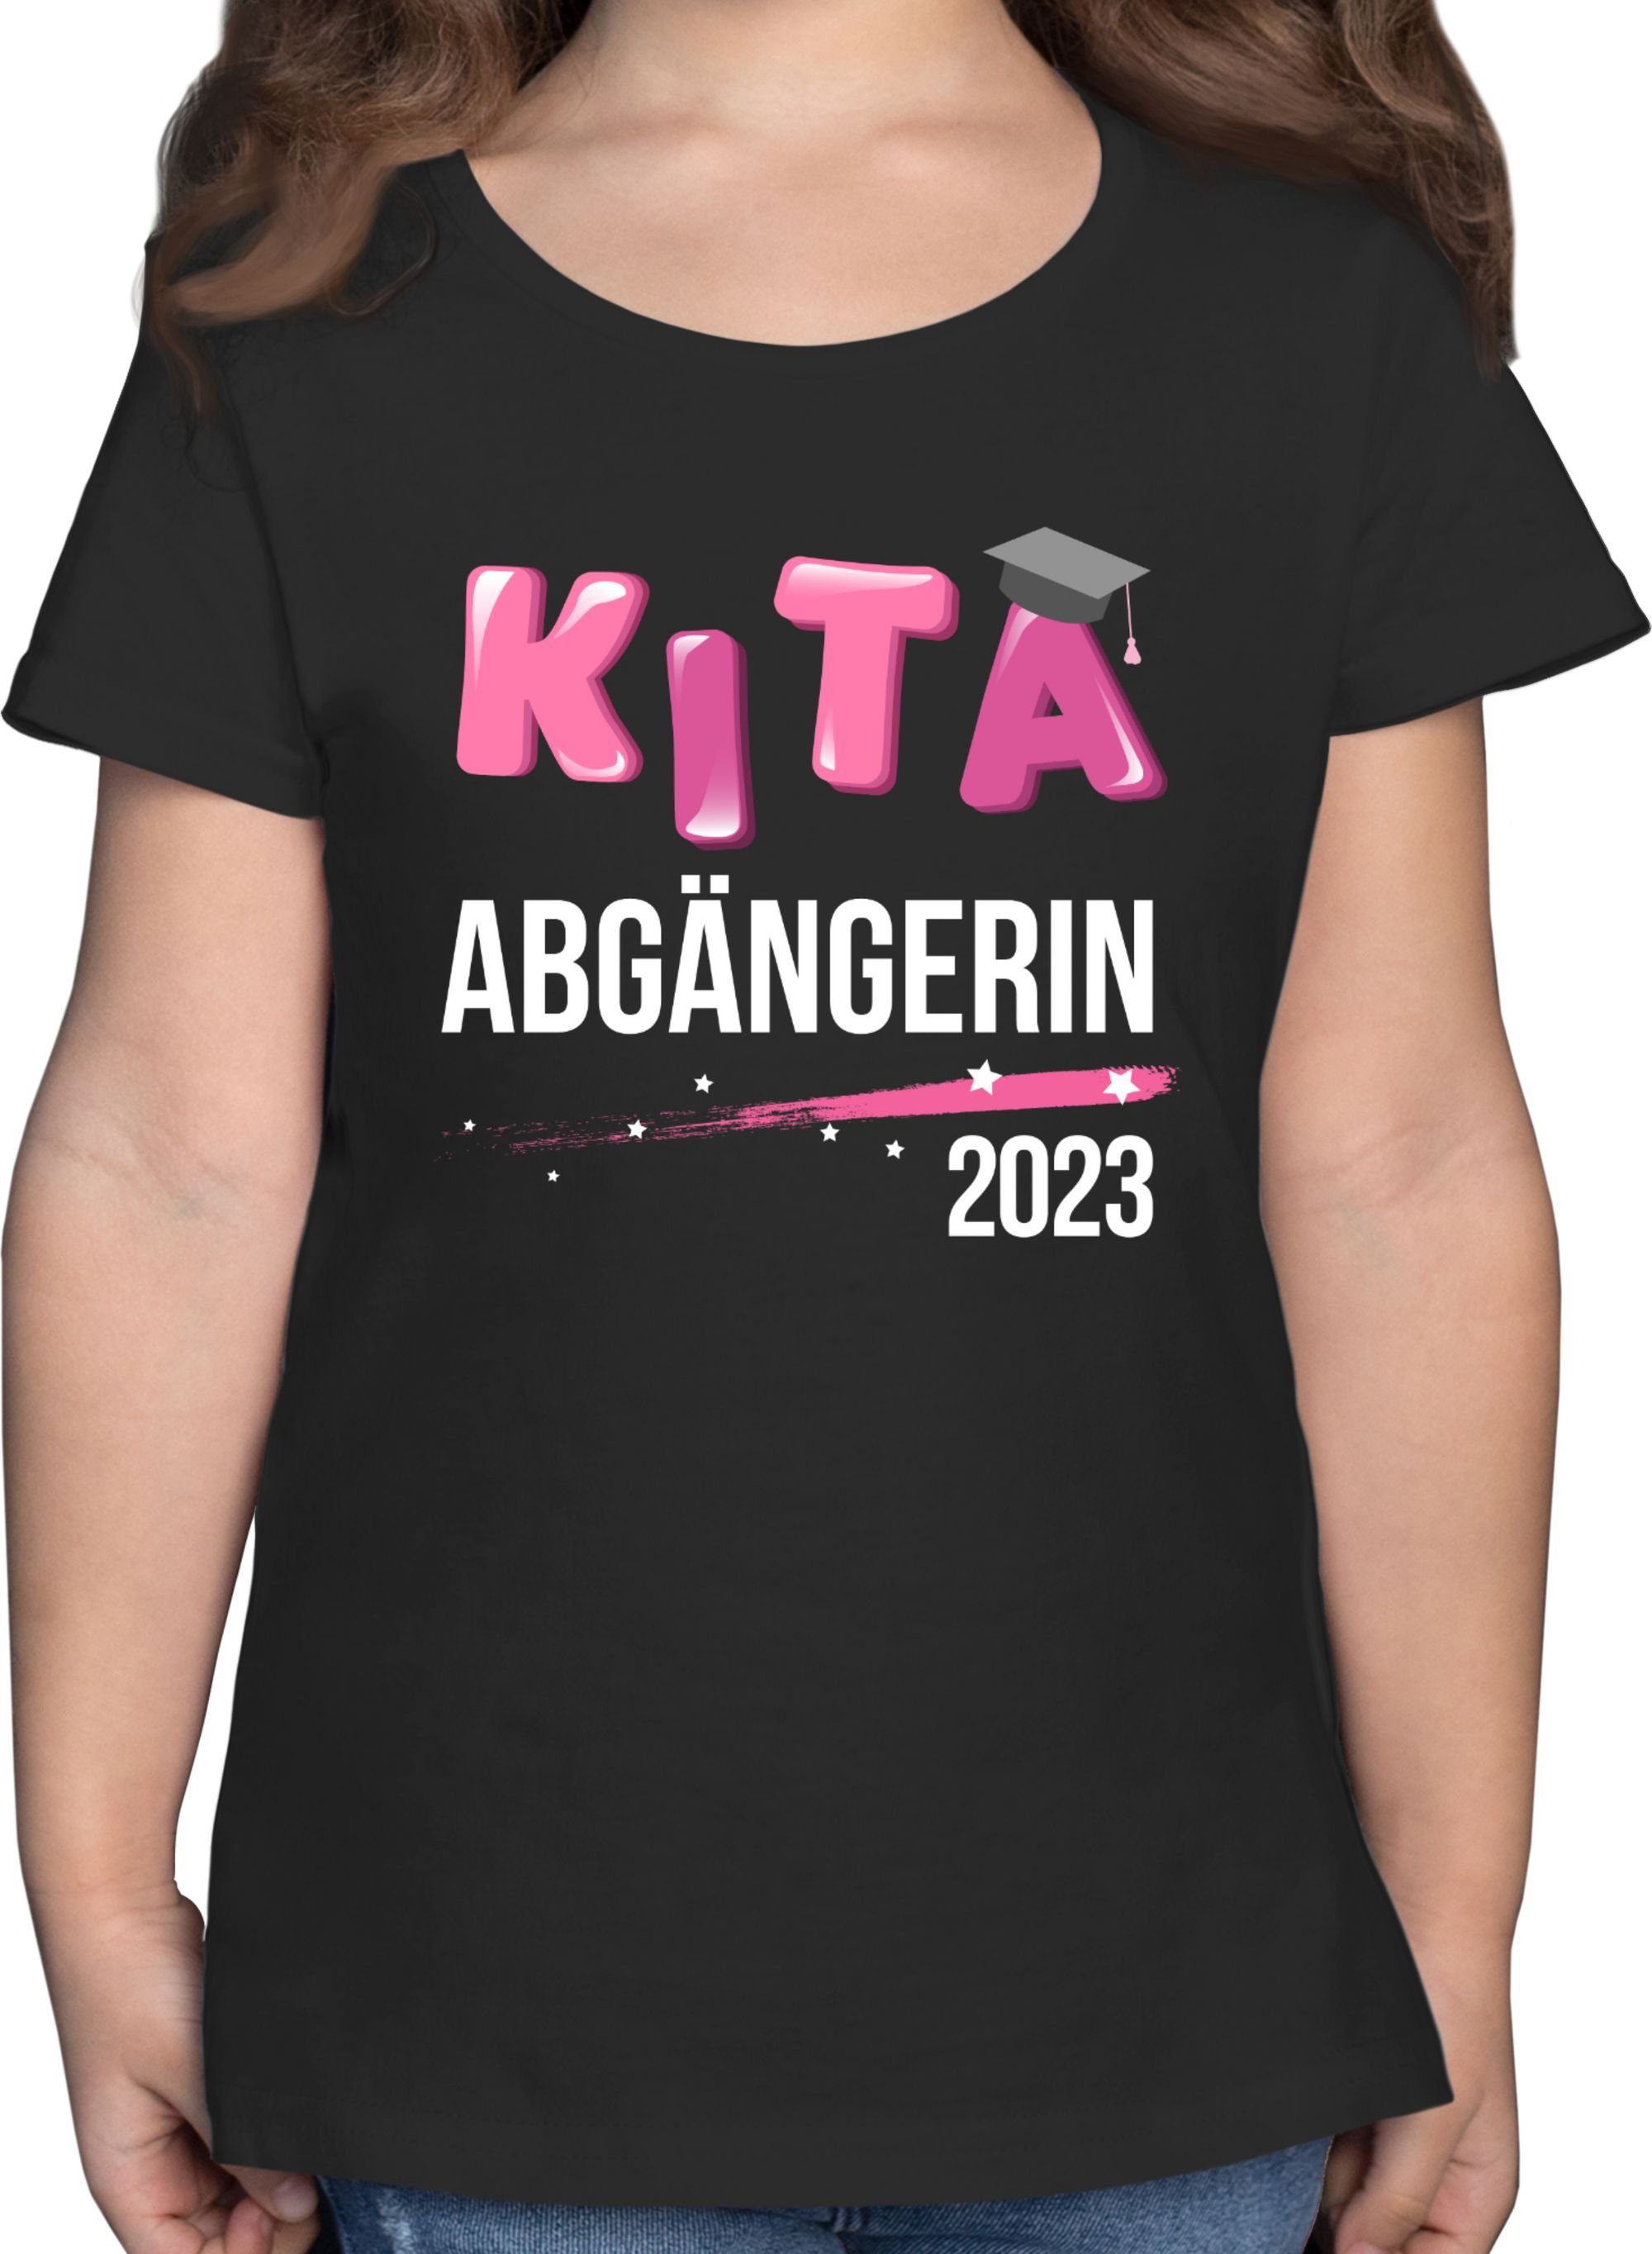 Mädchen 2023 2 Abgängerin Kita T-Shirt Einschulung Shirtracer Schwarz